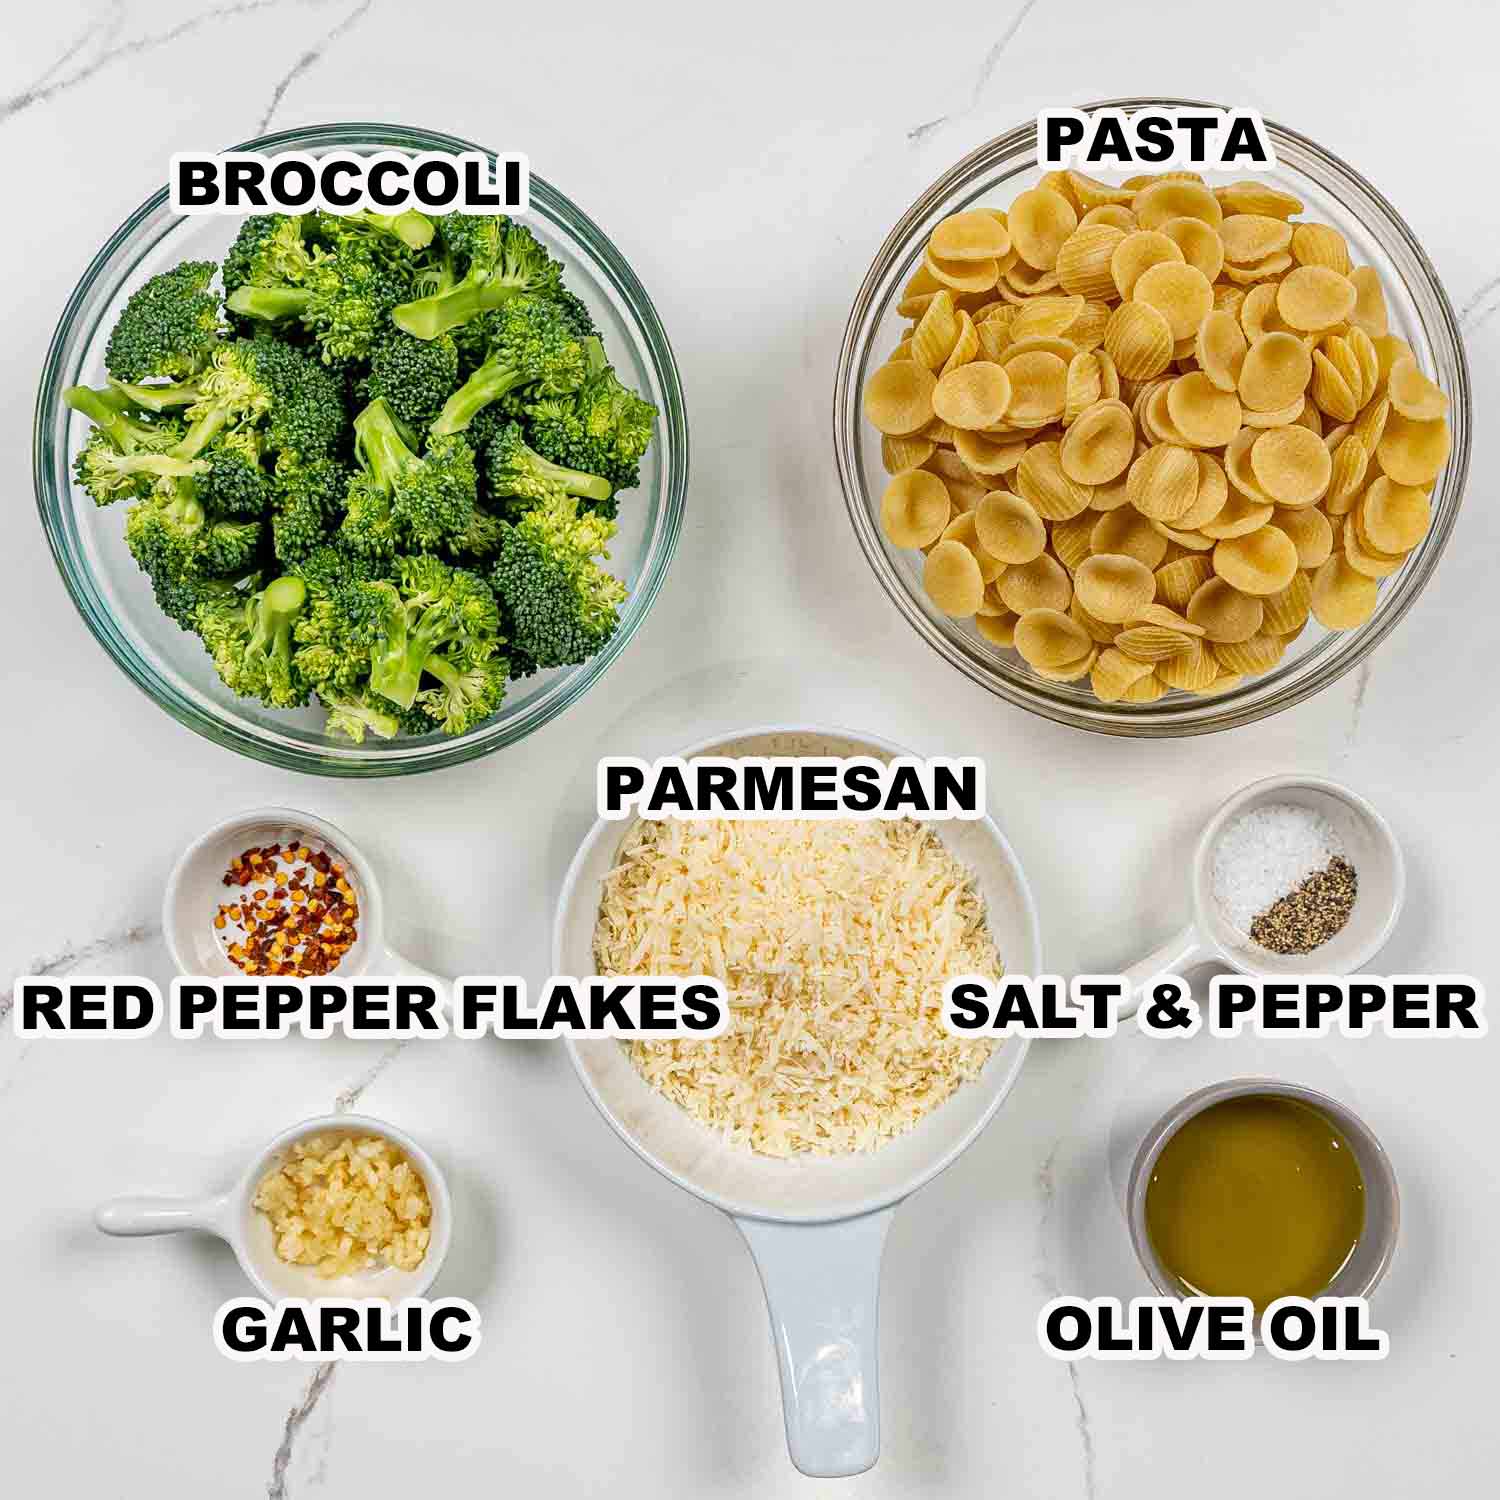 ingredients needed for broccoli pasta.